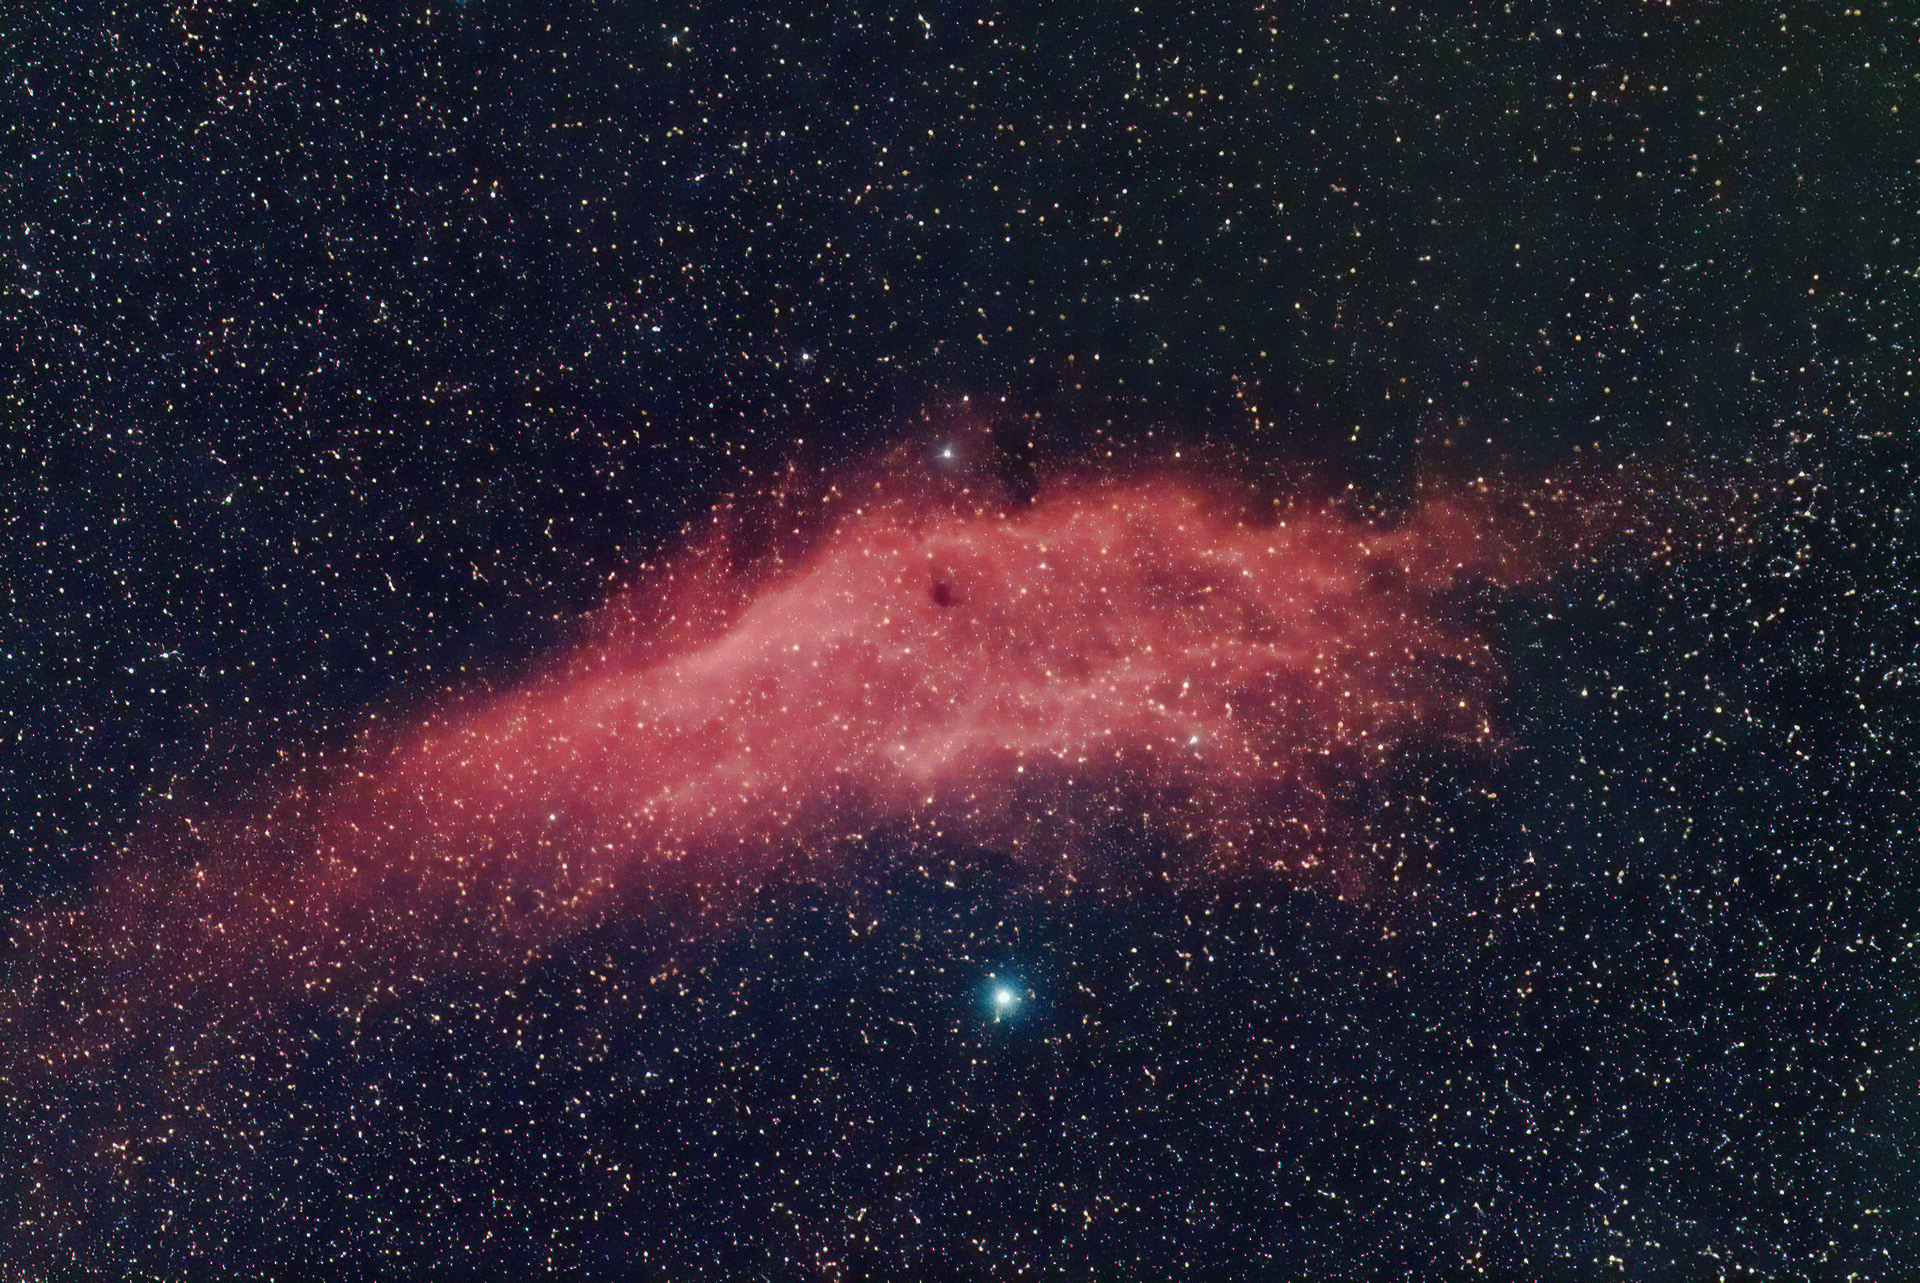 20210115-NGC1499-PENTACON300-5.6-XT1-6400-50X125s-DOF-13-25-18-SIRIL-2-ps-1920.jpg.da933b4eb197adcbebc5f9c4af9426f8.jpg